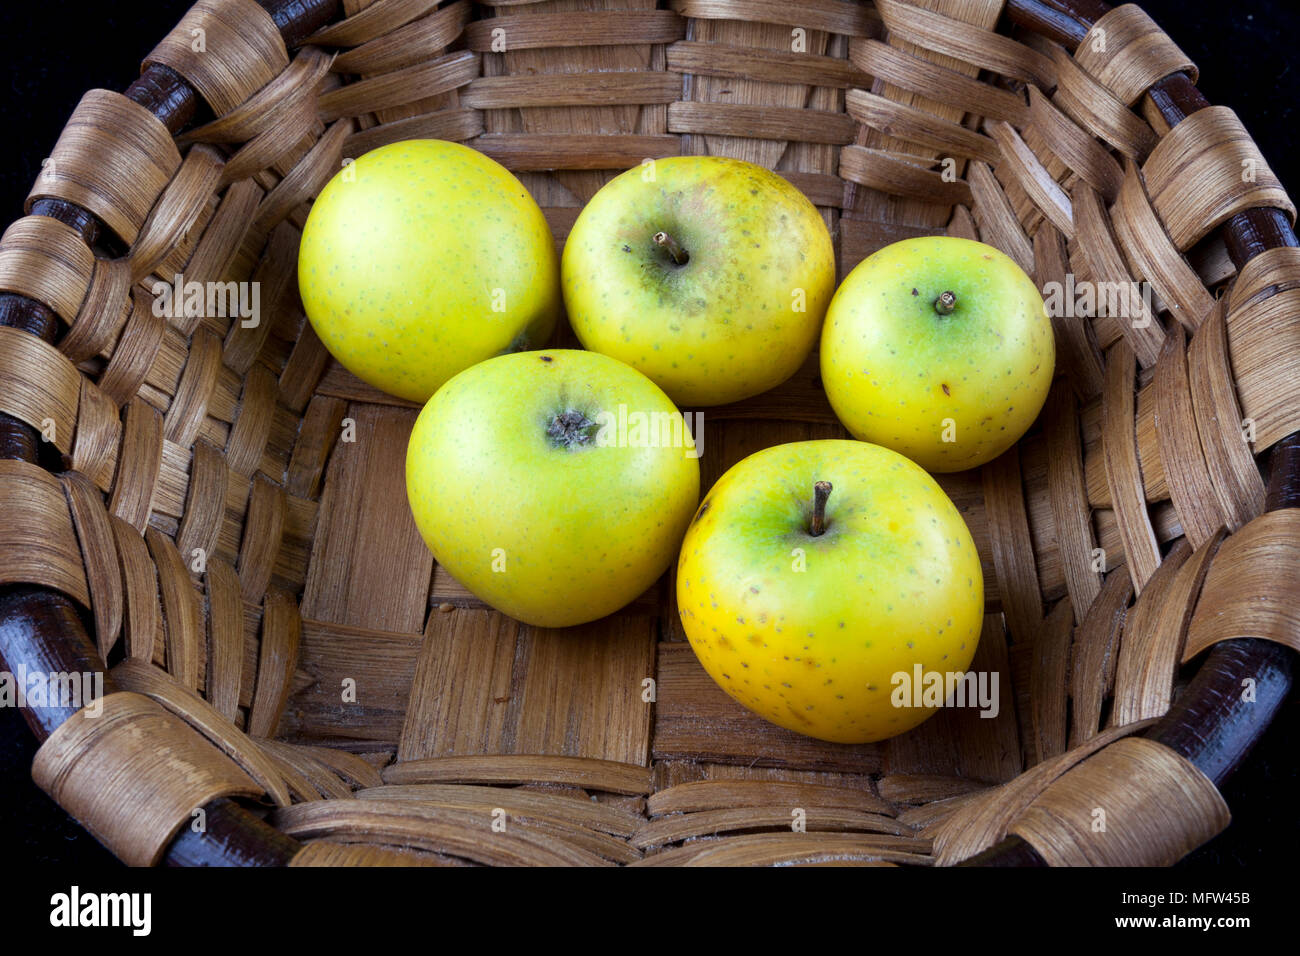 Old German Apple Cultivar 'Ananasrenette' Stock Photo